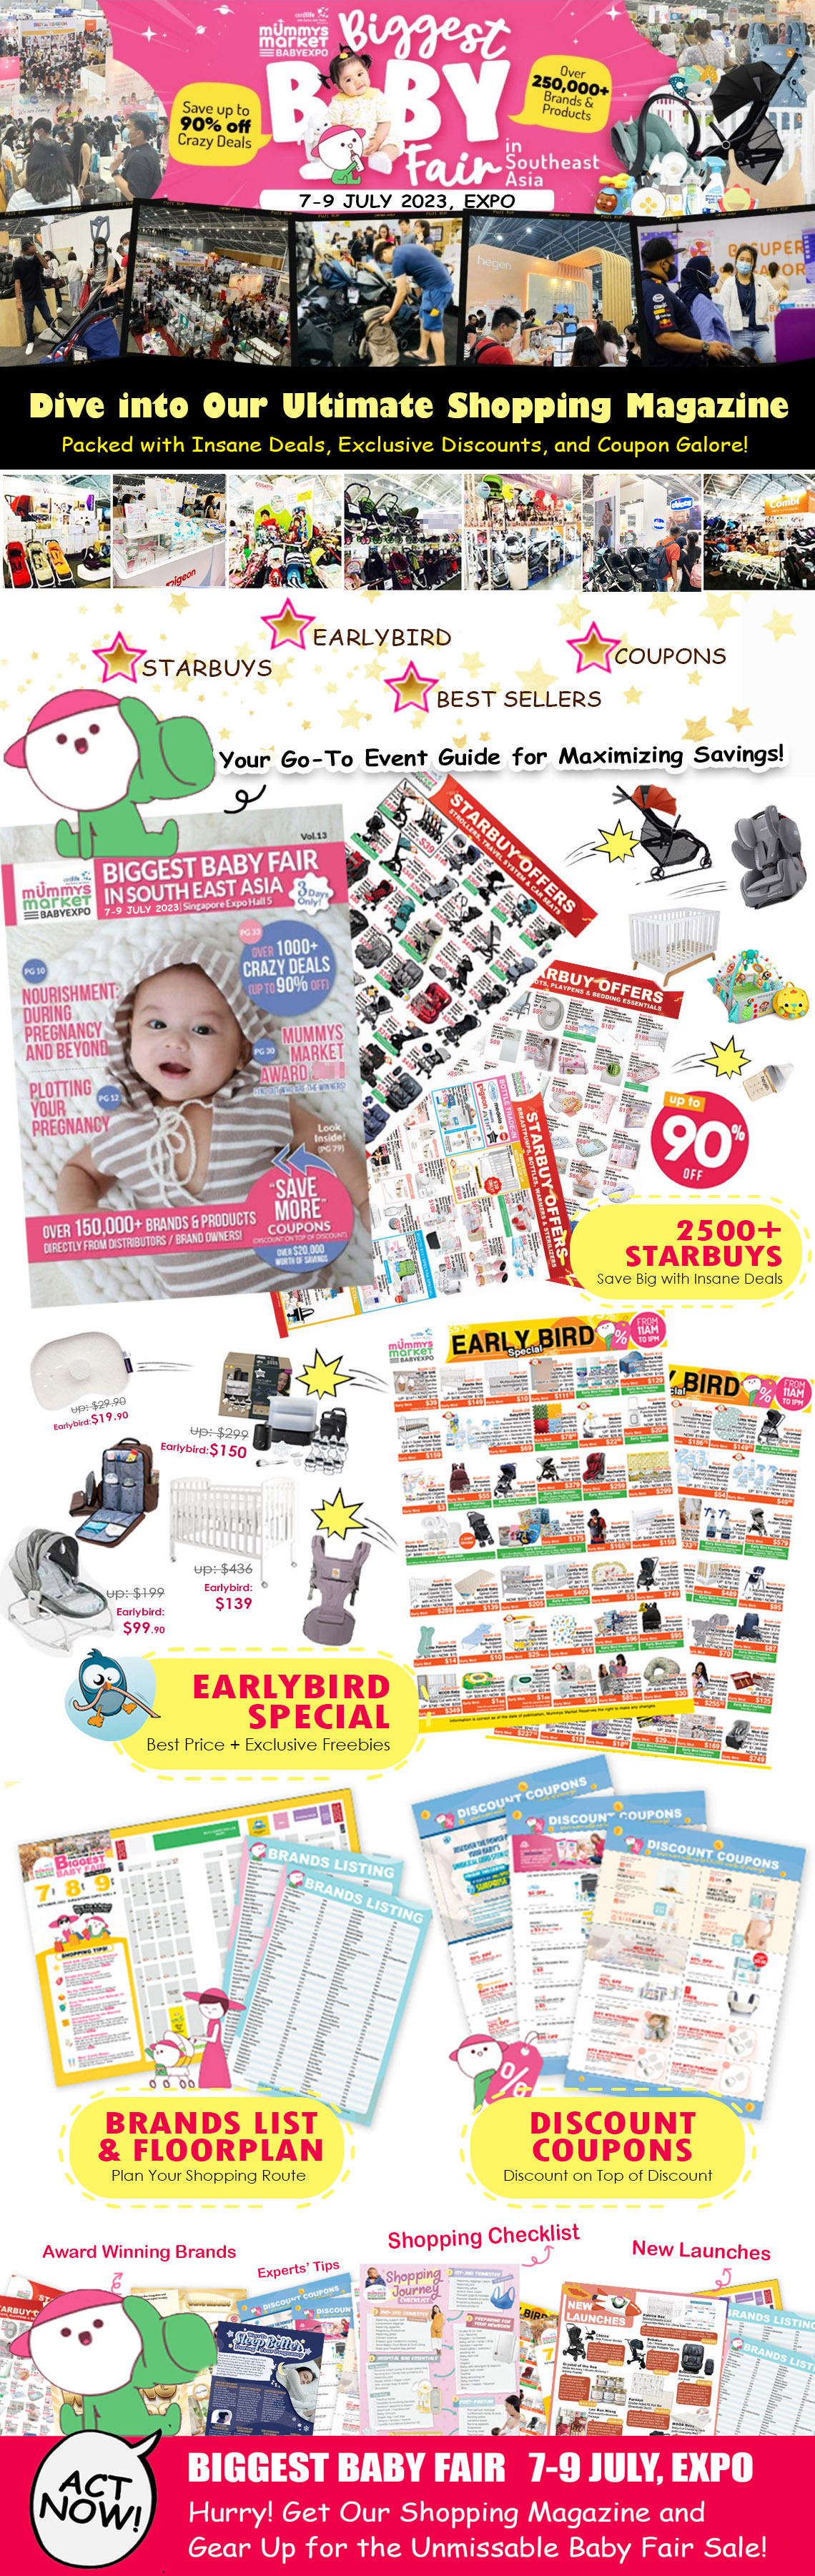 magazine-web-layout-jul23-mobile.jpg